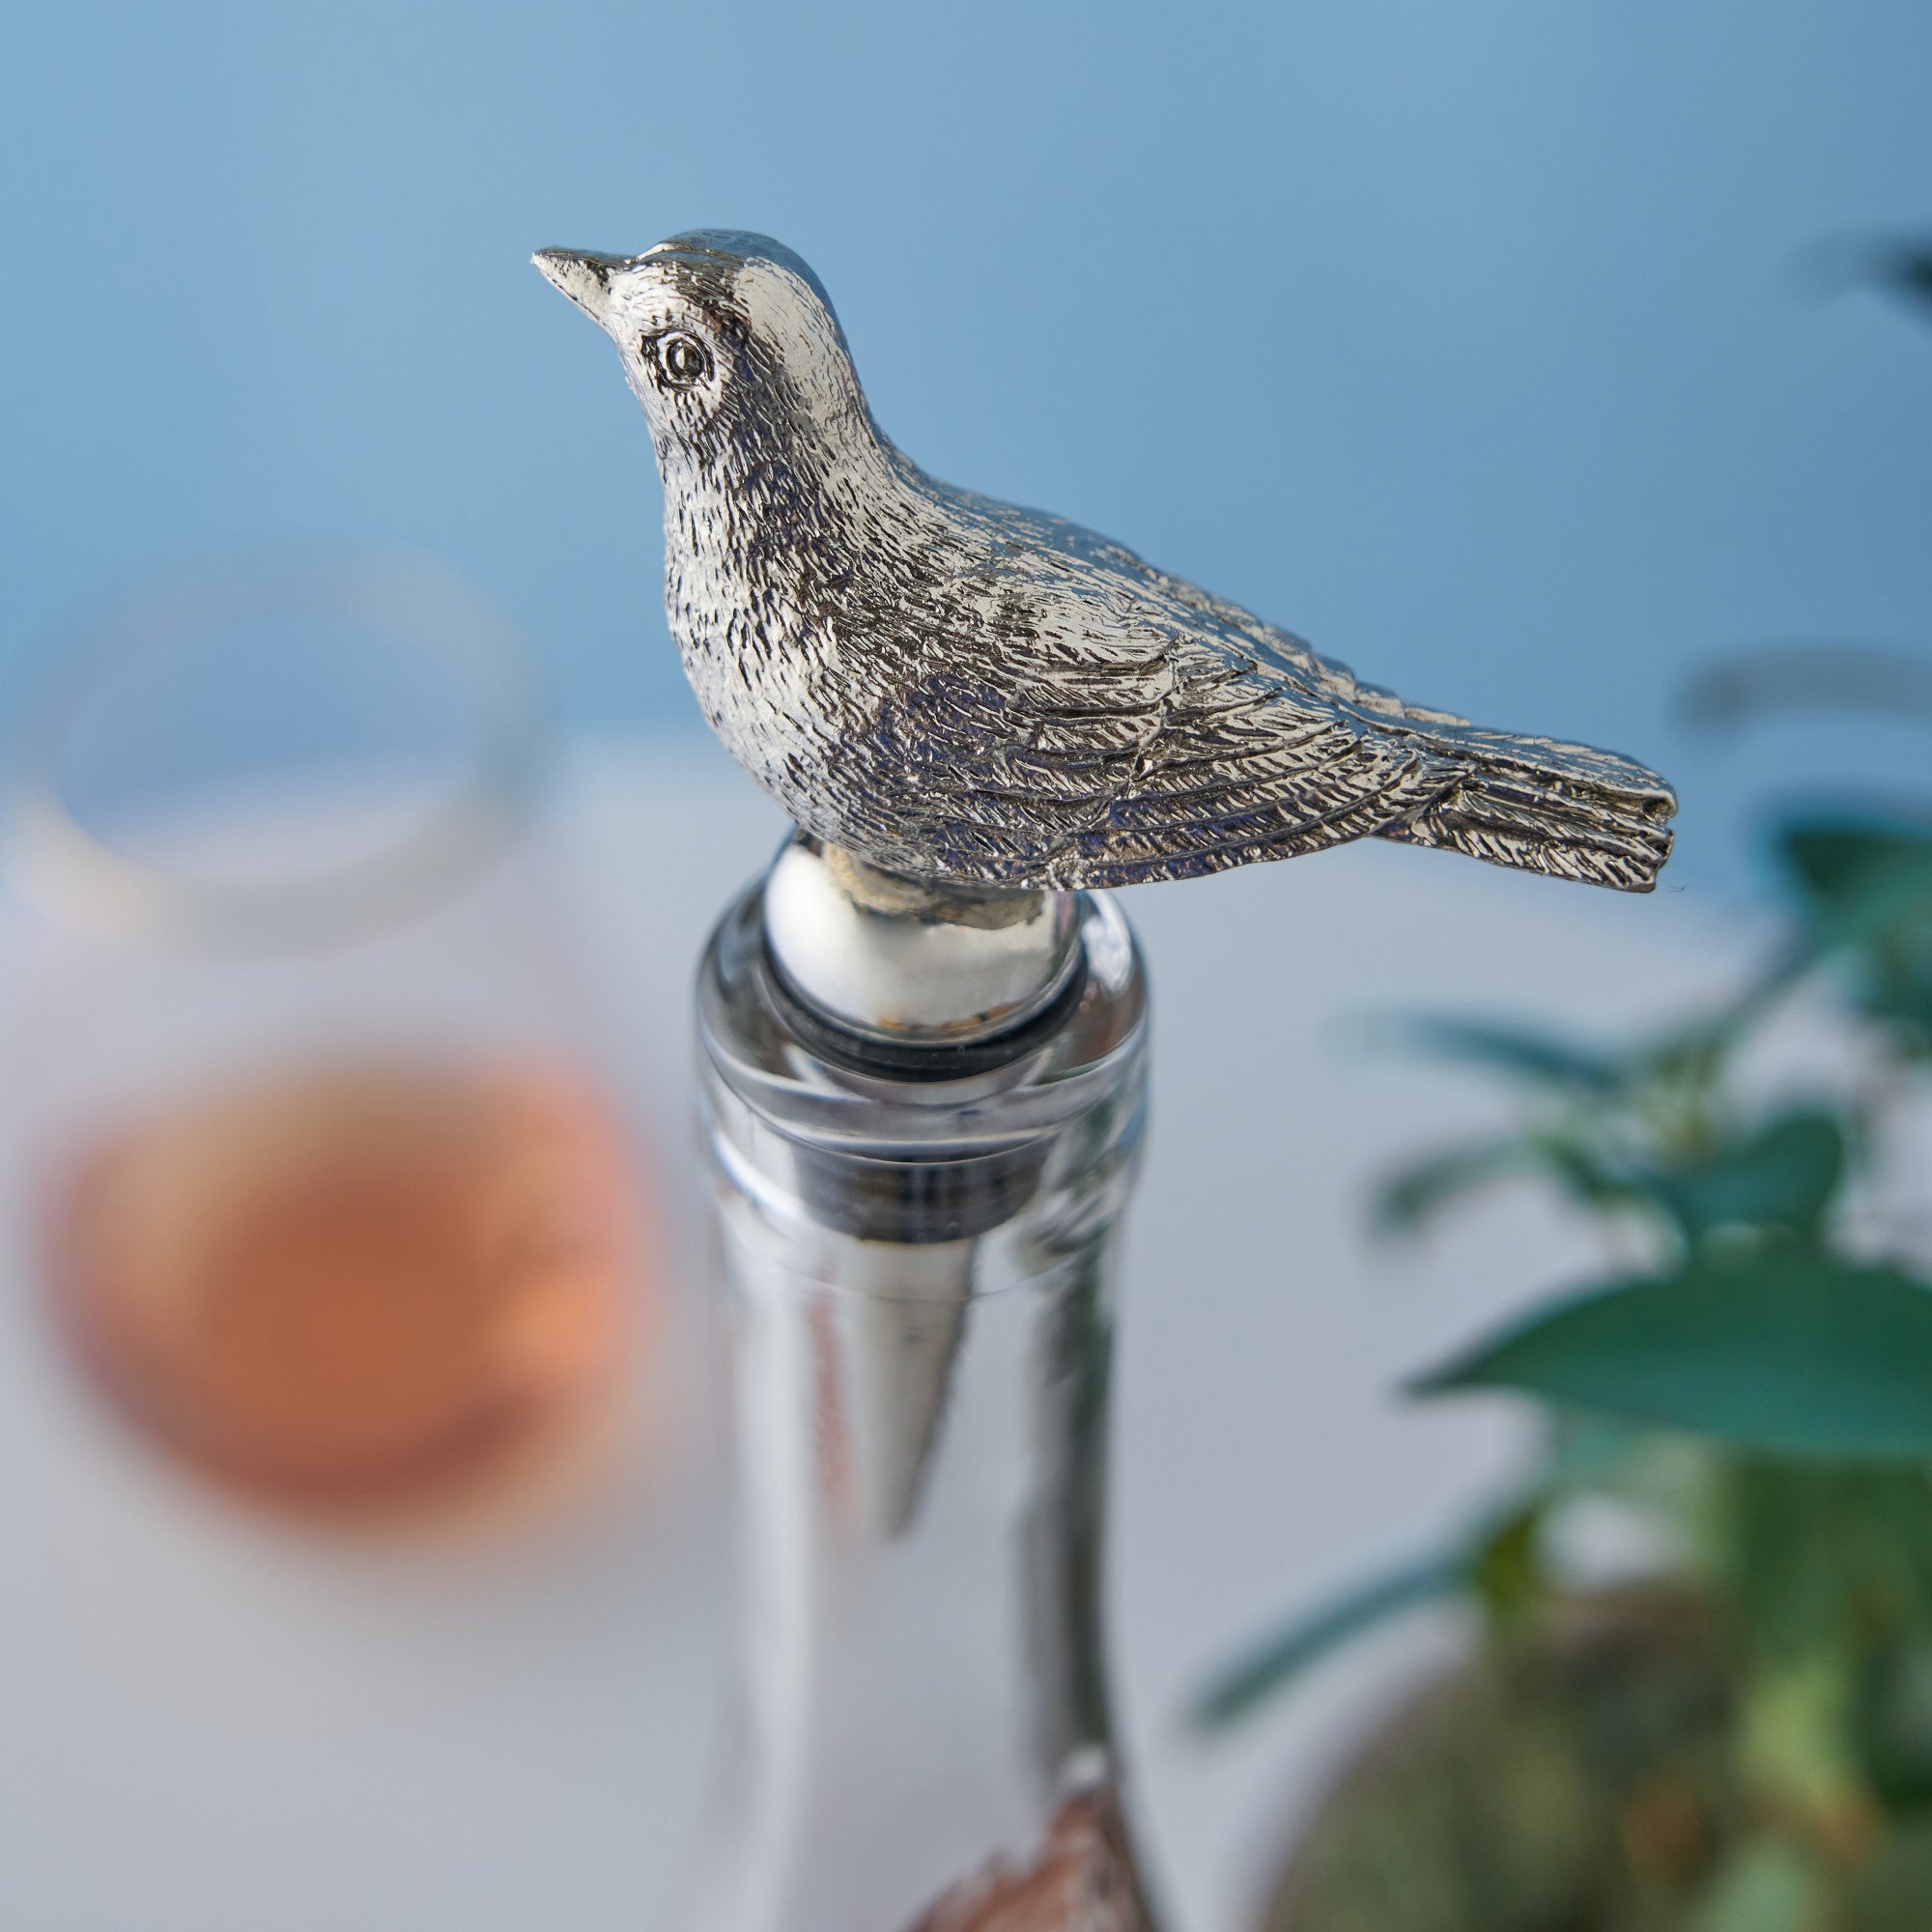 Bird Bottle Stopper by Twine Living® (7696) Wine Accessories Twine